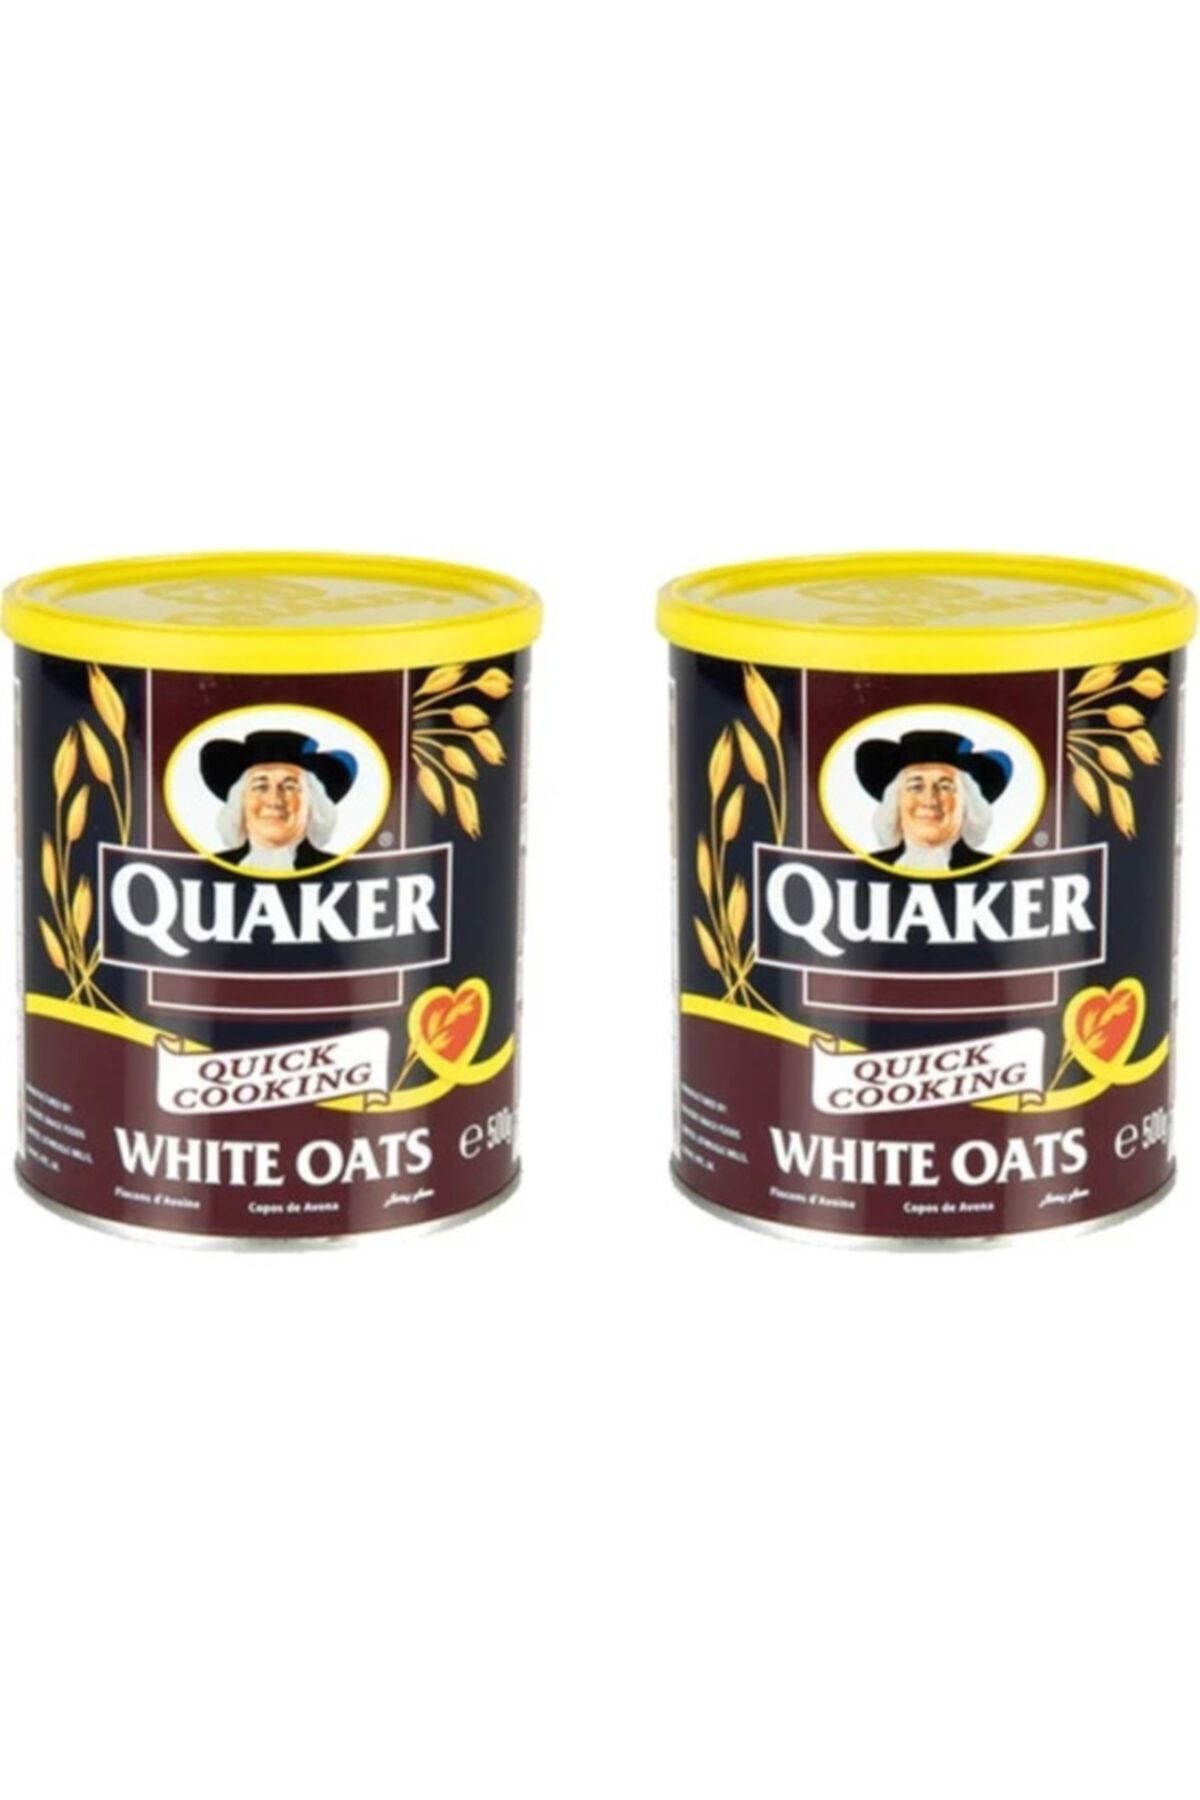 Quaker Cooking, White Oats, Yulaf, 500g X 2